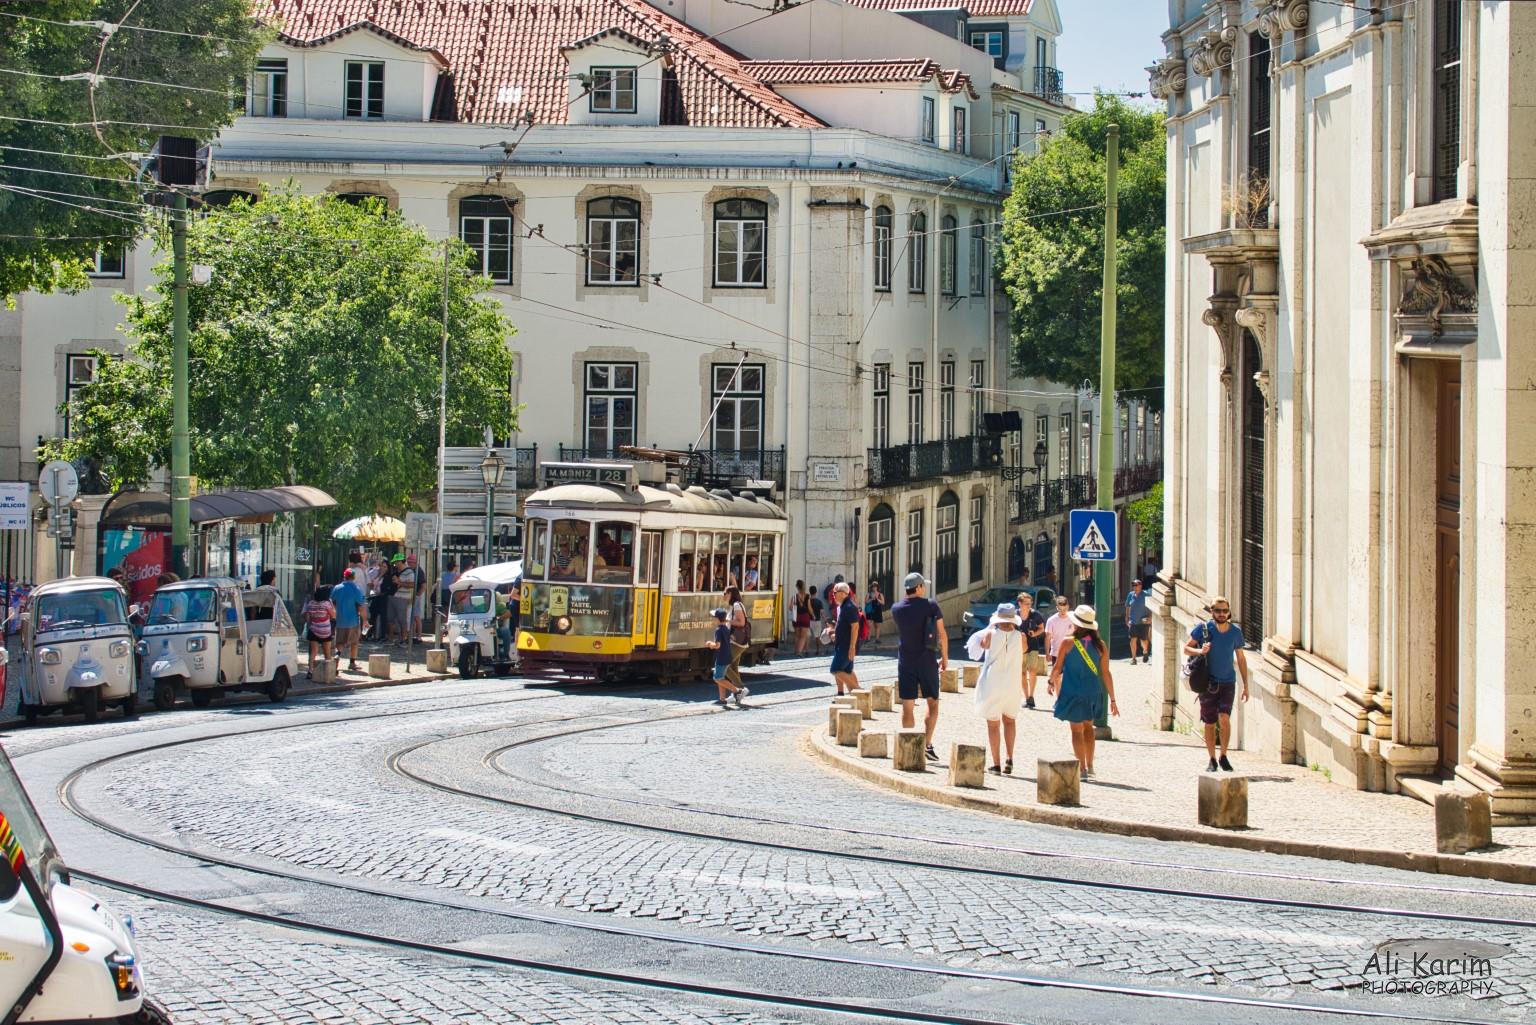 Lisbon Portugal: Alfama and Tram 28; outside the Lisbon Cathedral (Sé de Lisboa). Tuk-tuks were also popular with tourists